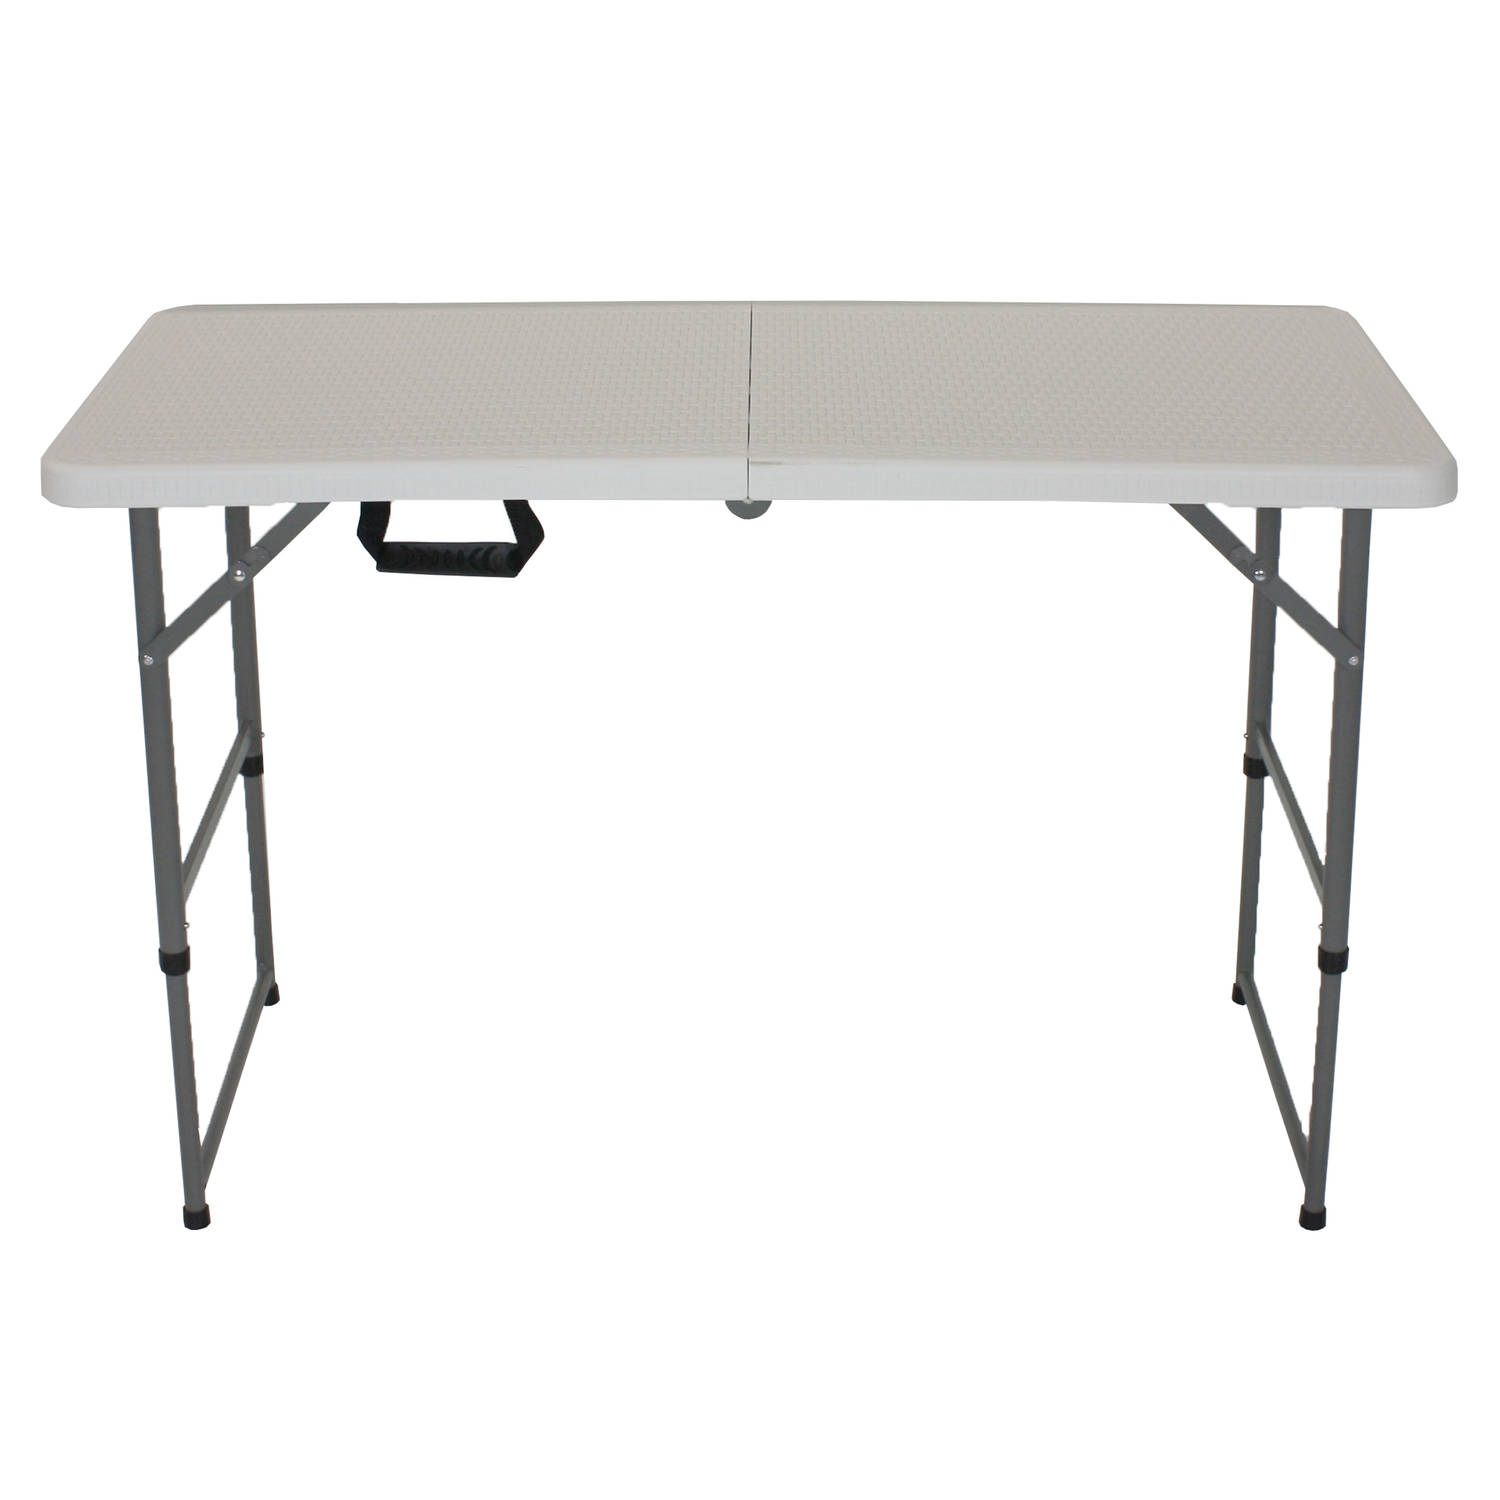 Lowander inklapbare tafel 120x60 cm Klaptafel Vouwtafel Campingtafel Extra stabiel Wit